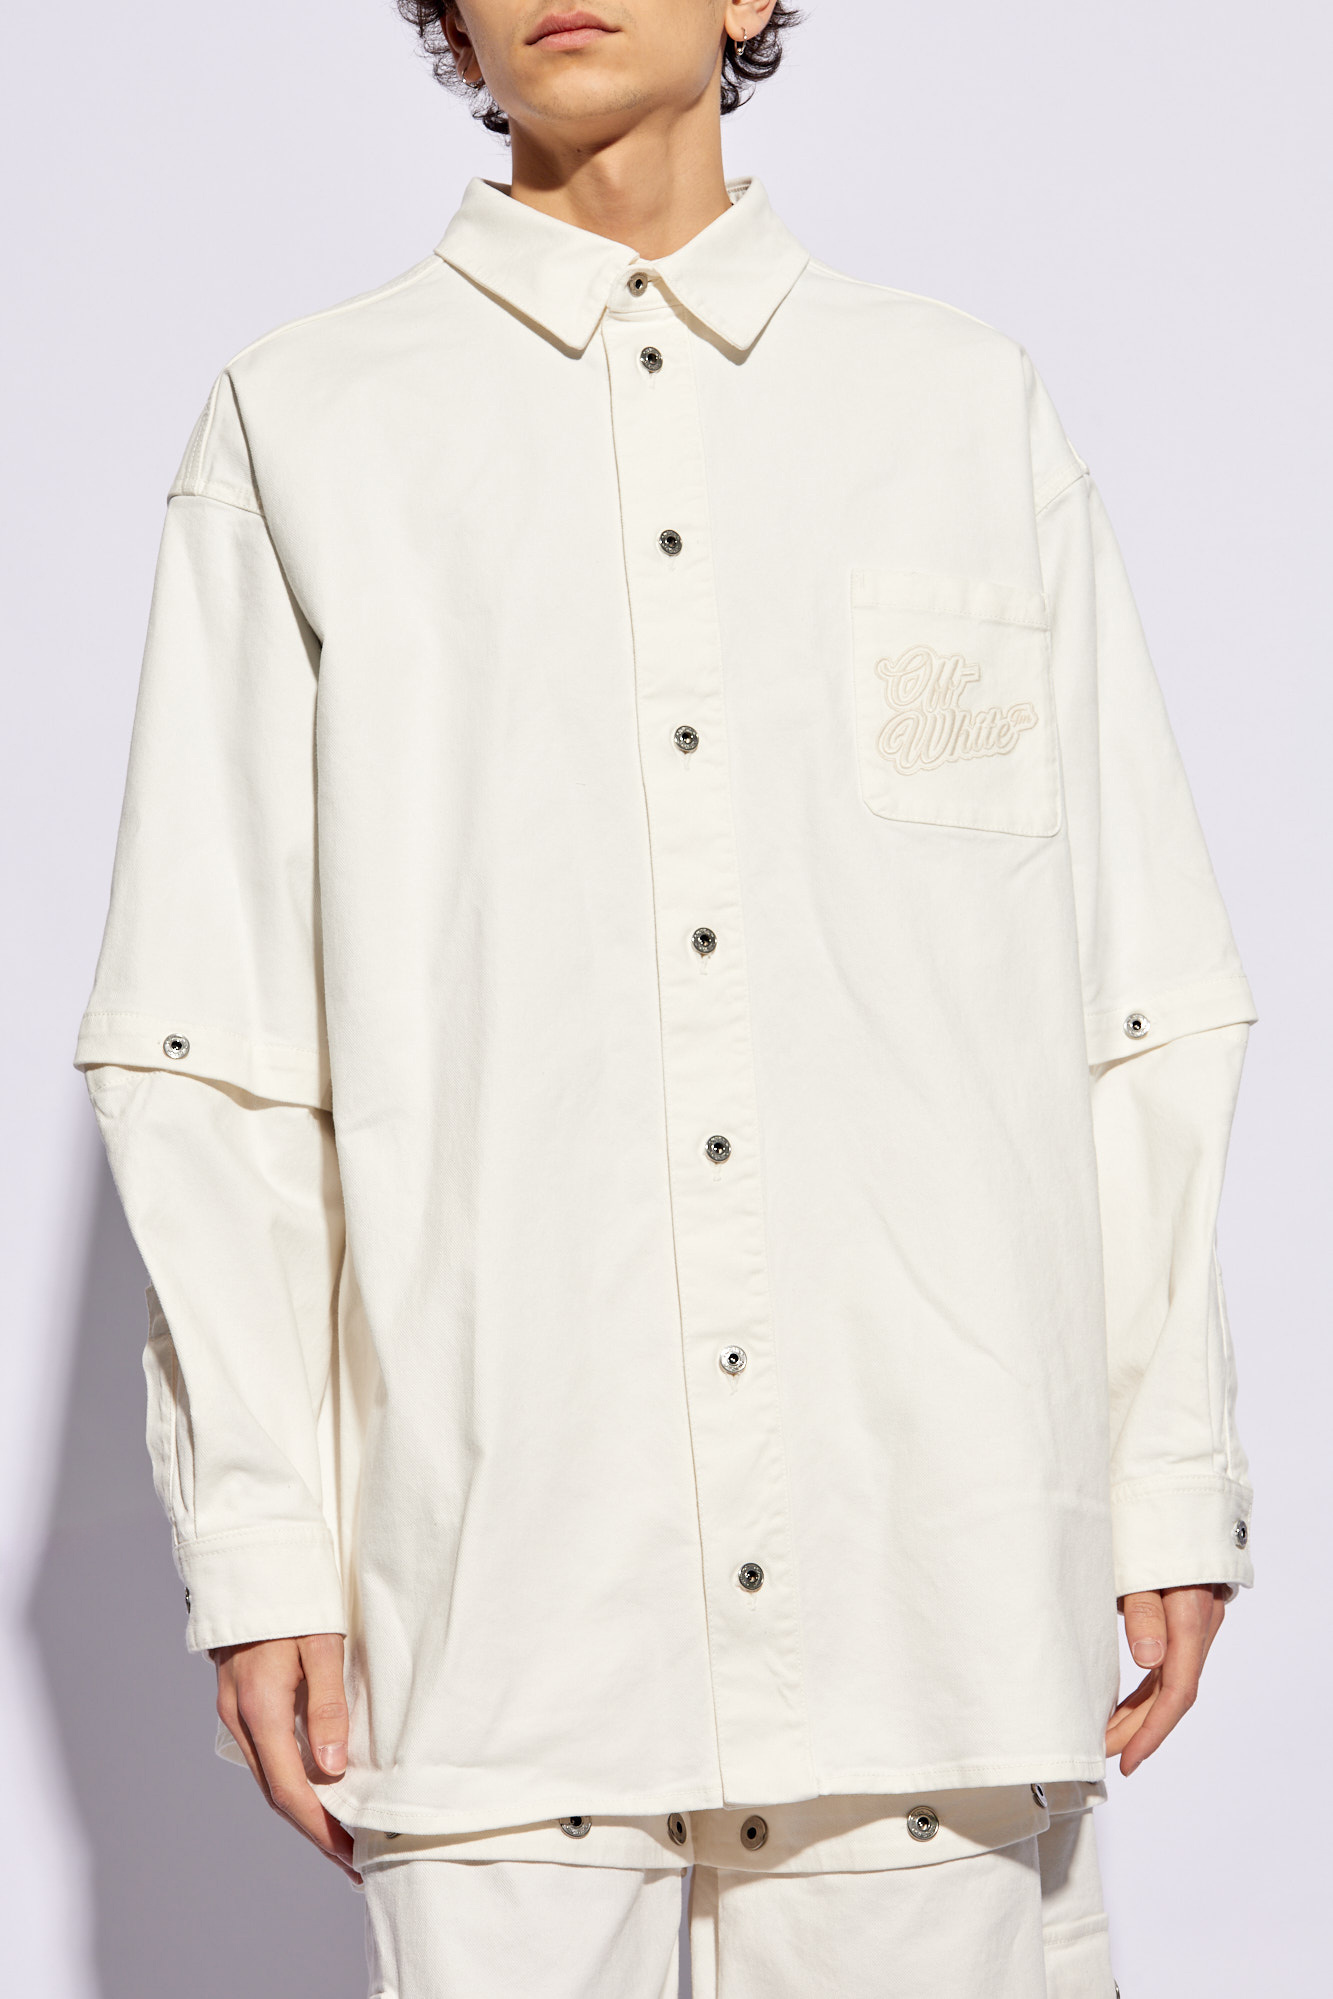 Off-White Denim travis shirt with logo